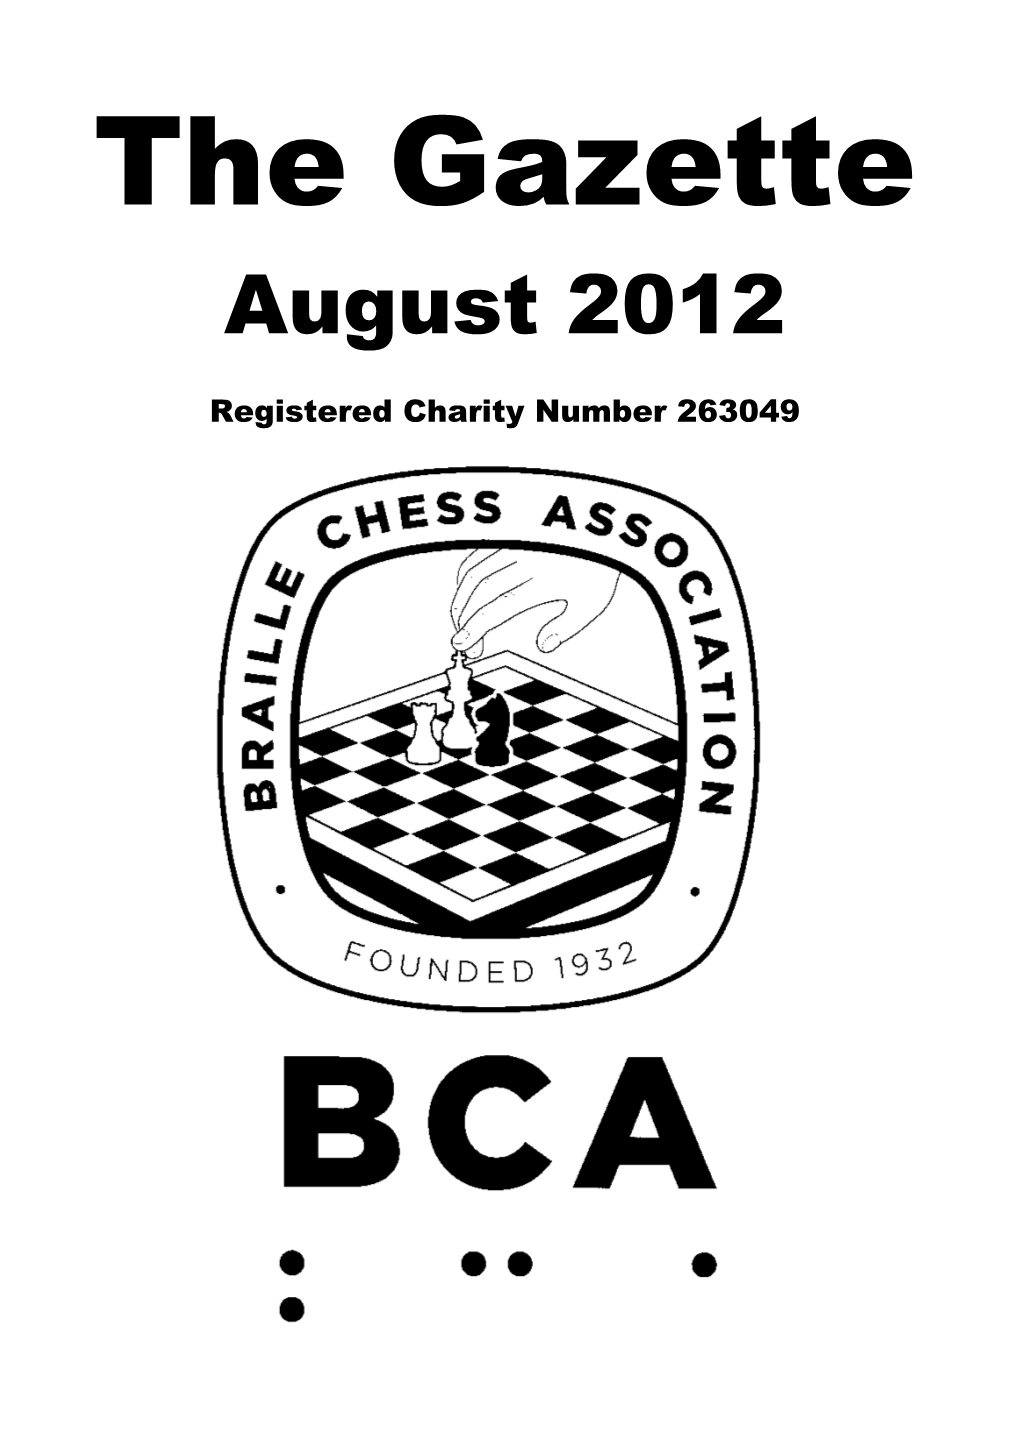 BCA Website Address: Email